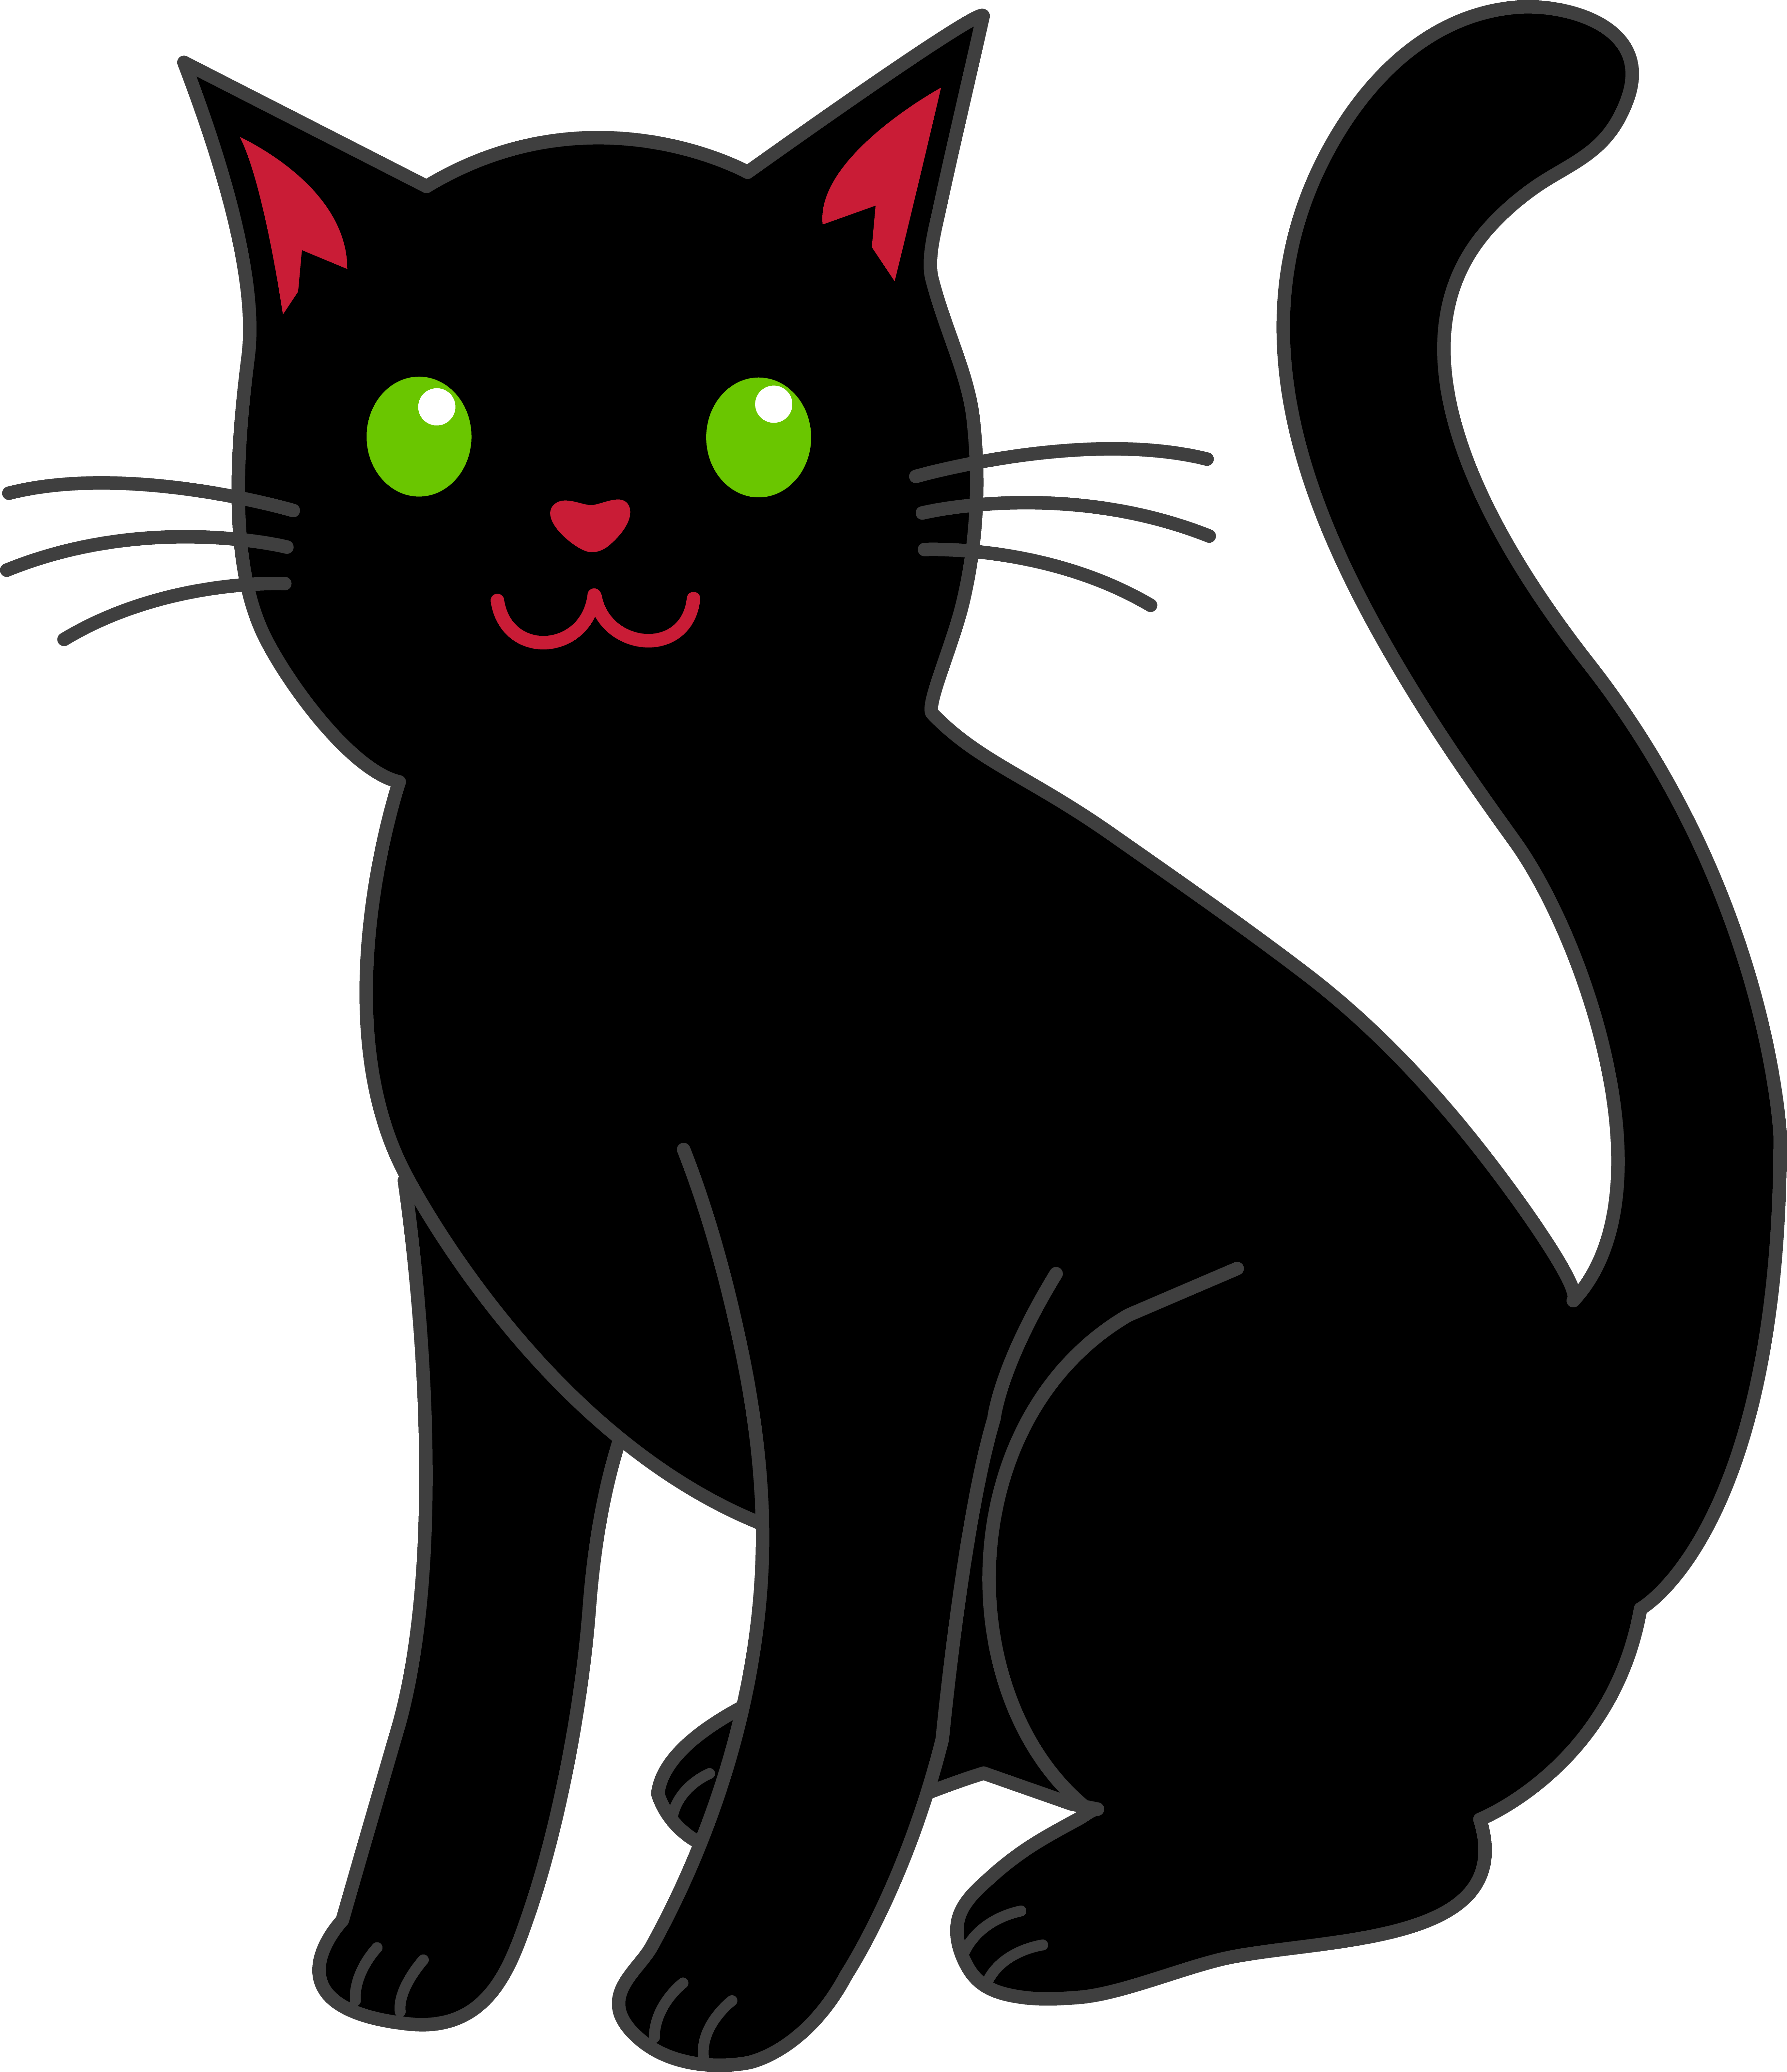 Black Cat Cartoons